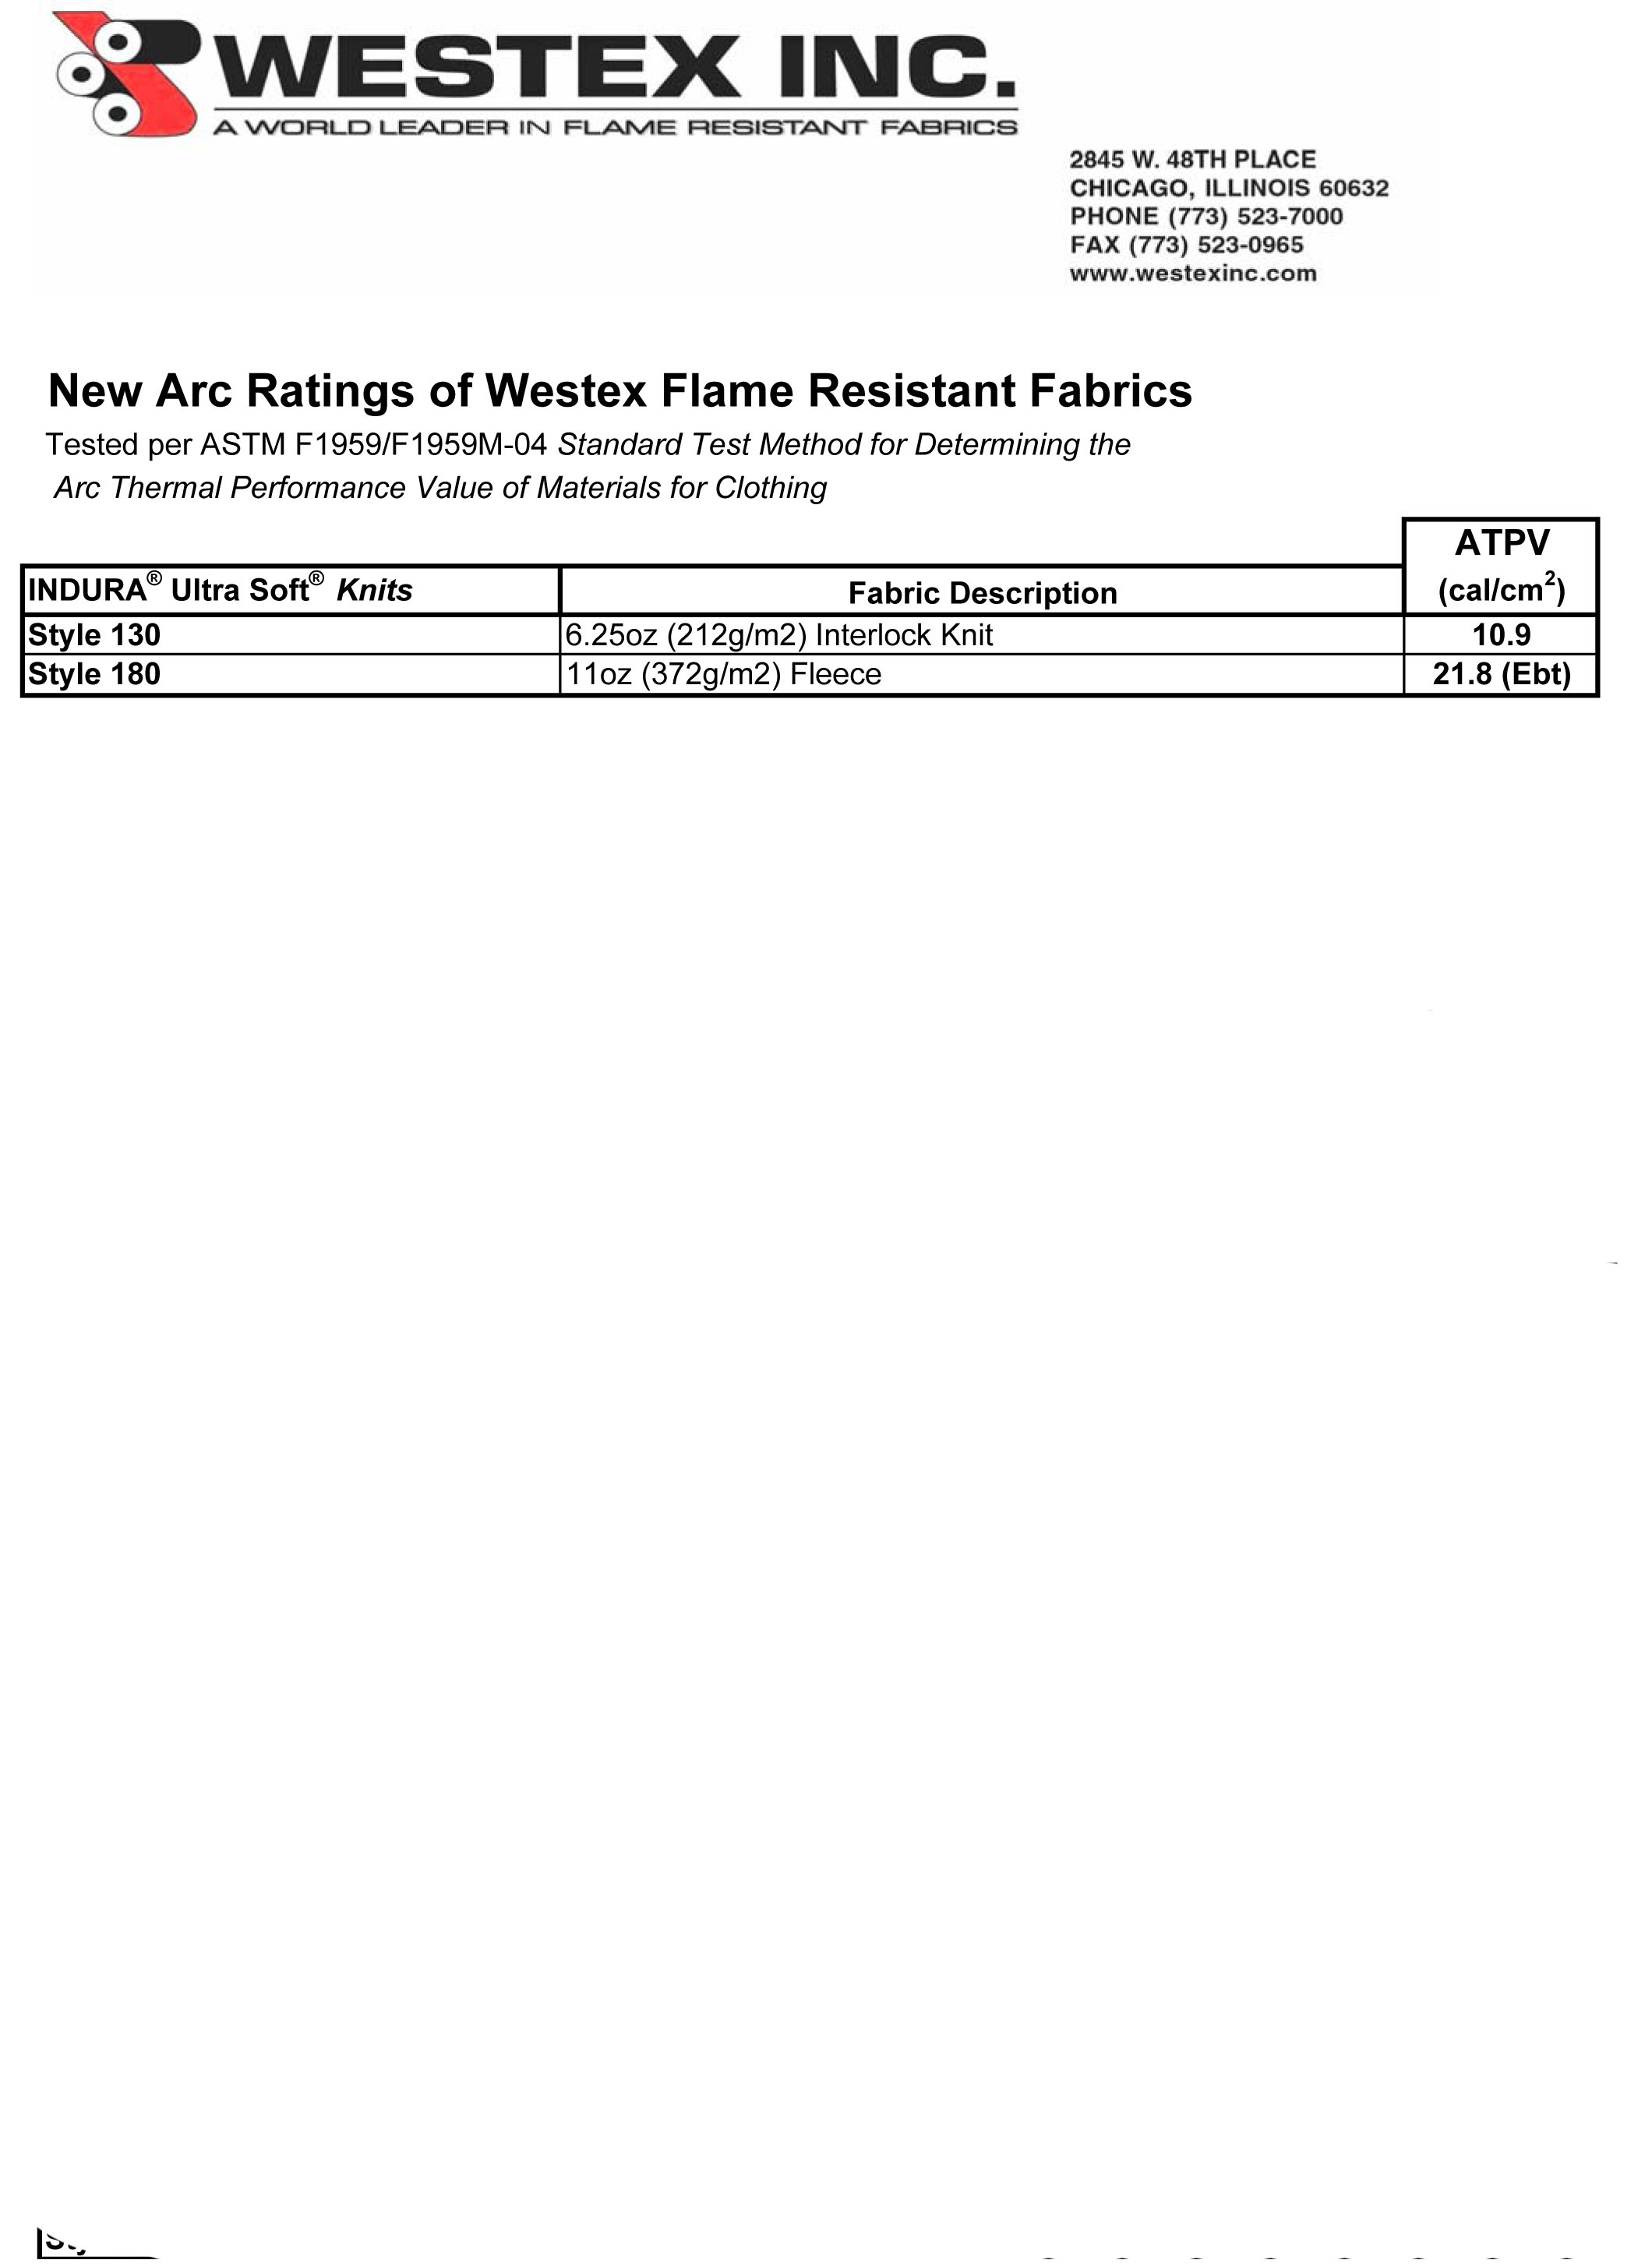 westex-arc-ratings-knits-1-.jpg